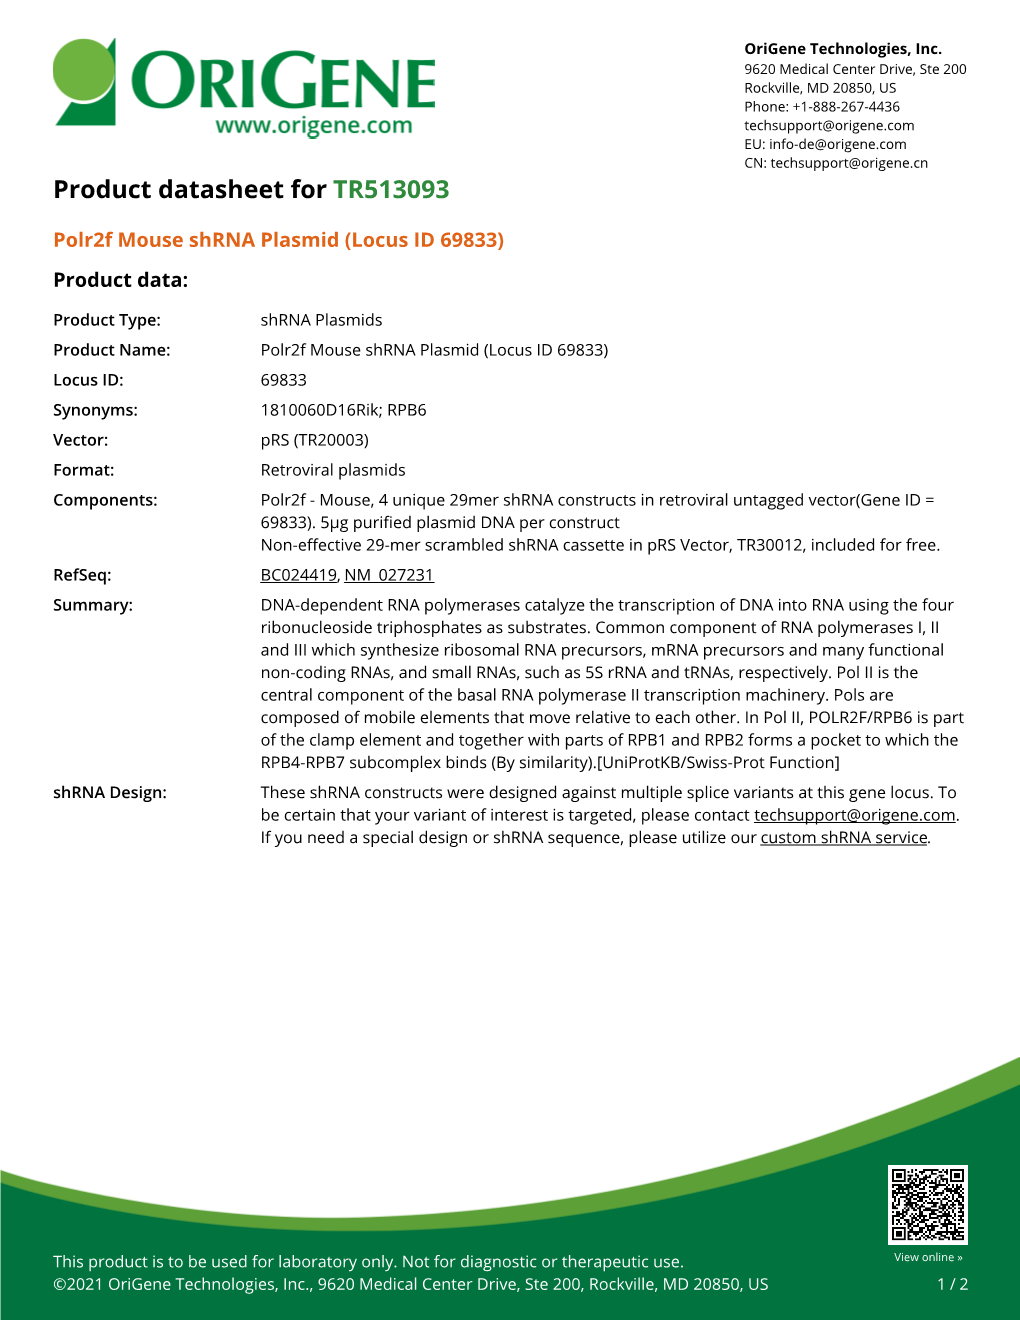 Polr2f Mouse Shrna Plasmid (Locus ID 69833) Product Data